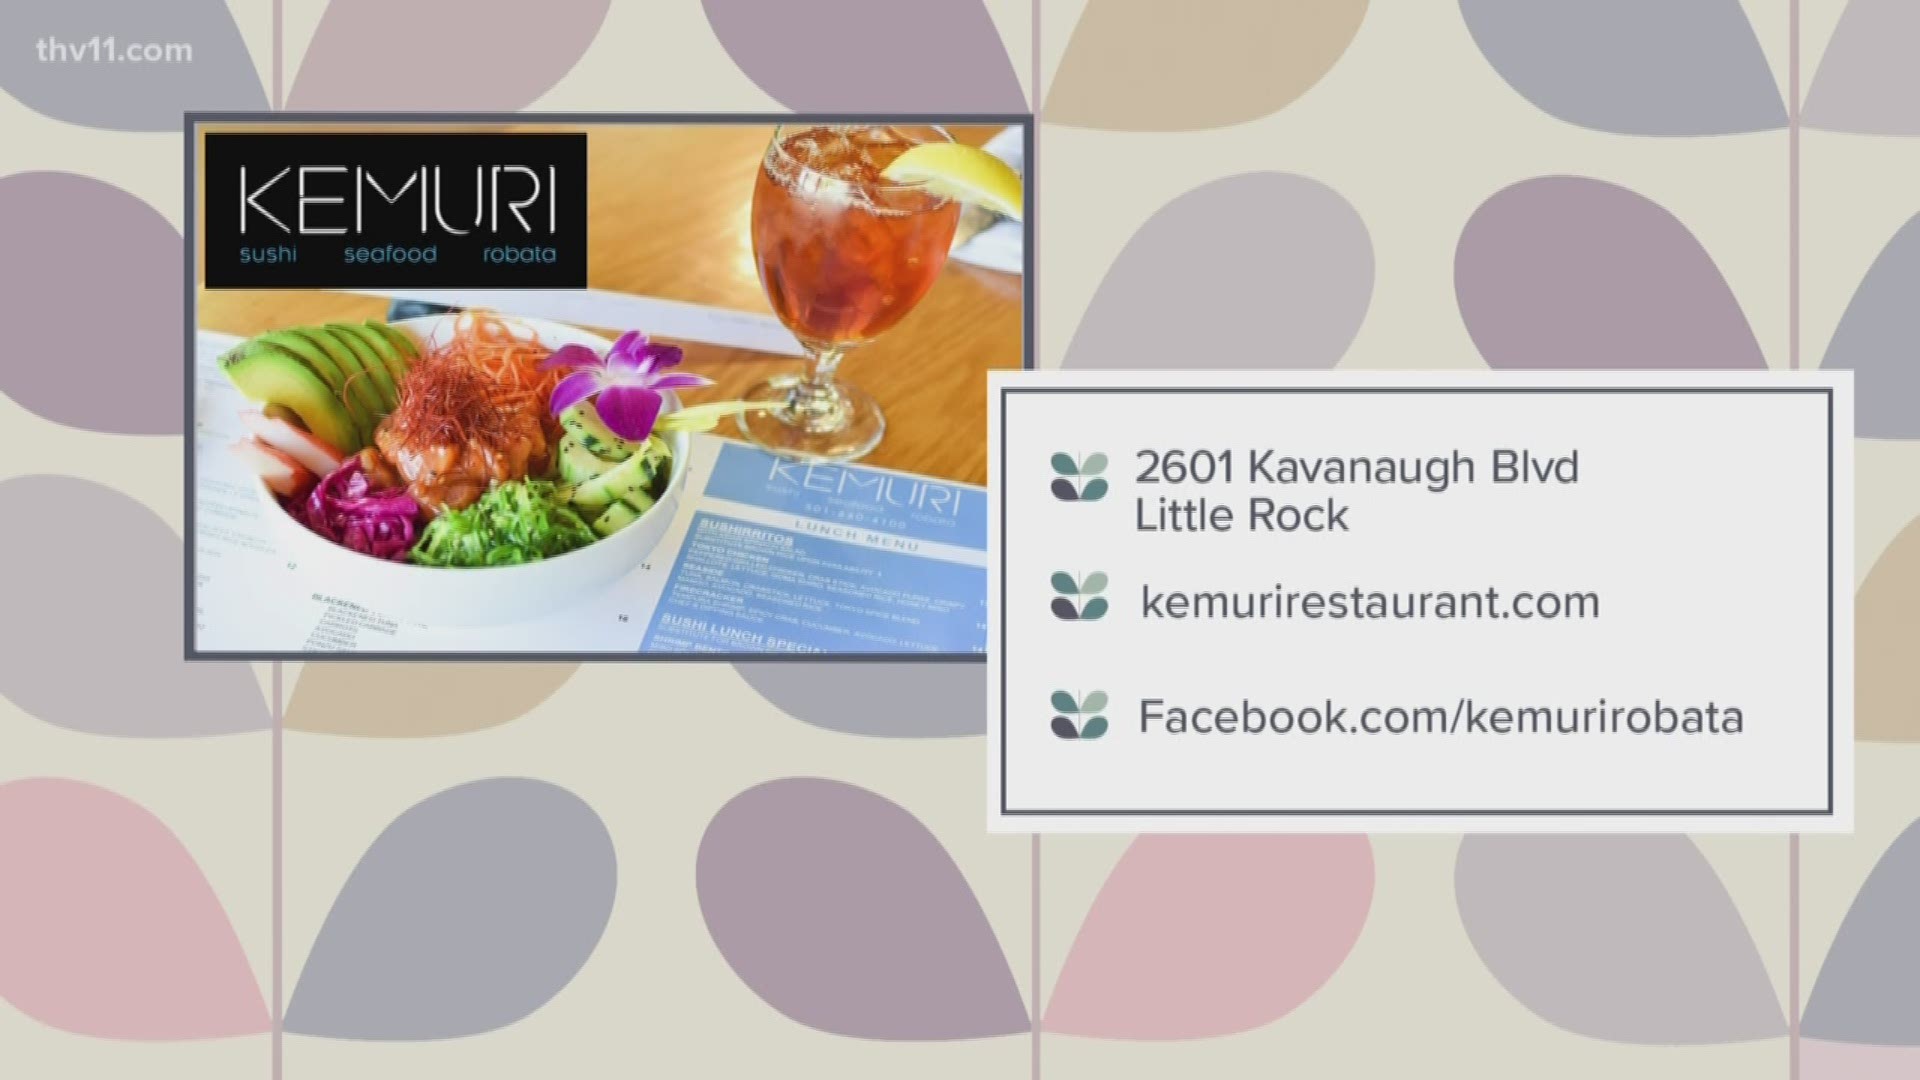 Kemuri Japenese Restaurant is located at 2601 Kavanaugh Blvd in Little Rock.